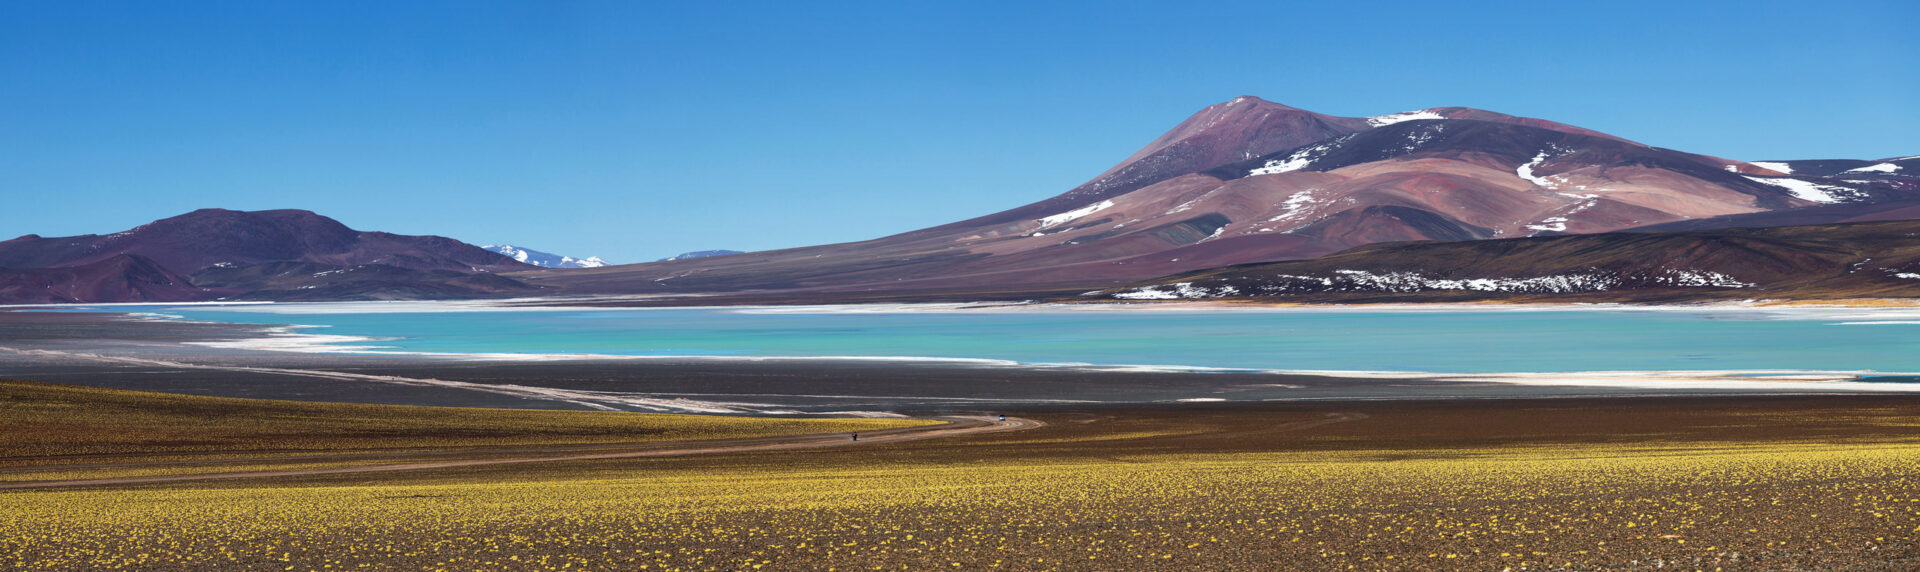 Atacama Be Pano Argentinie Selfdrive2